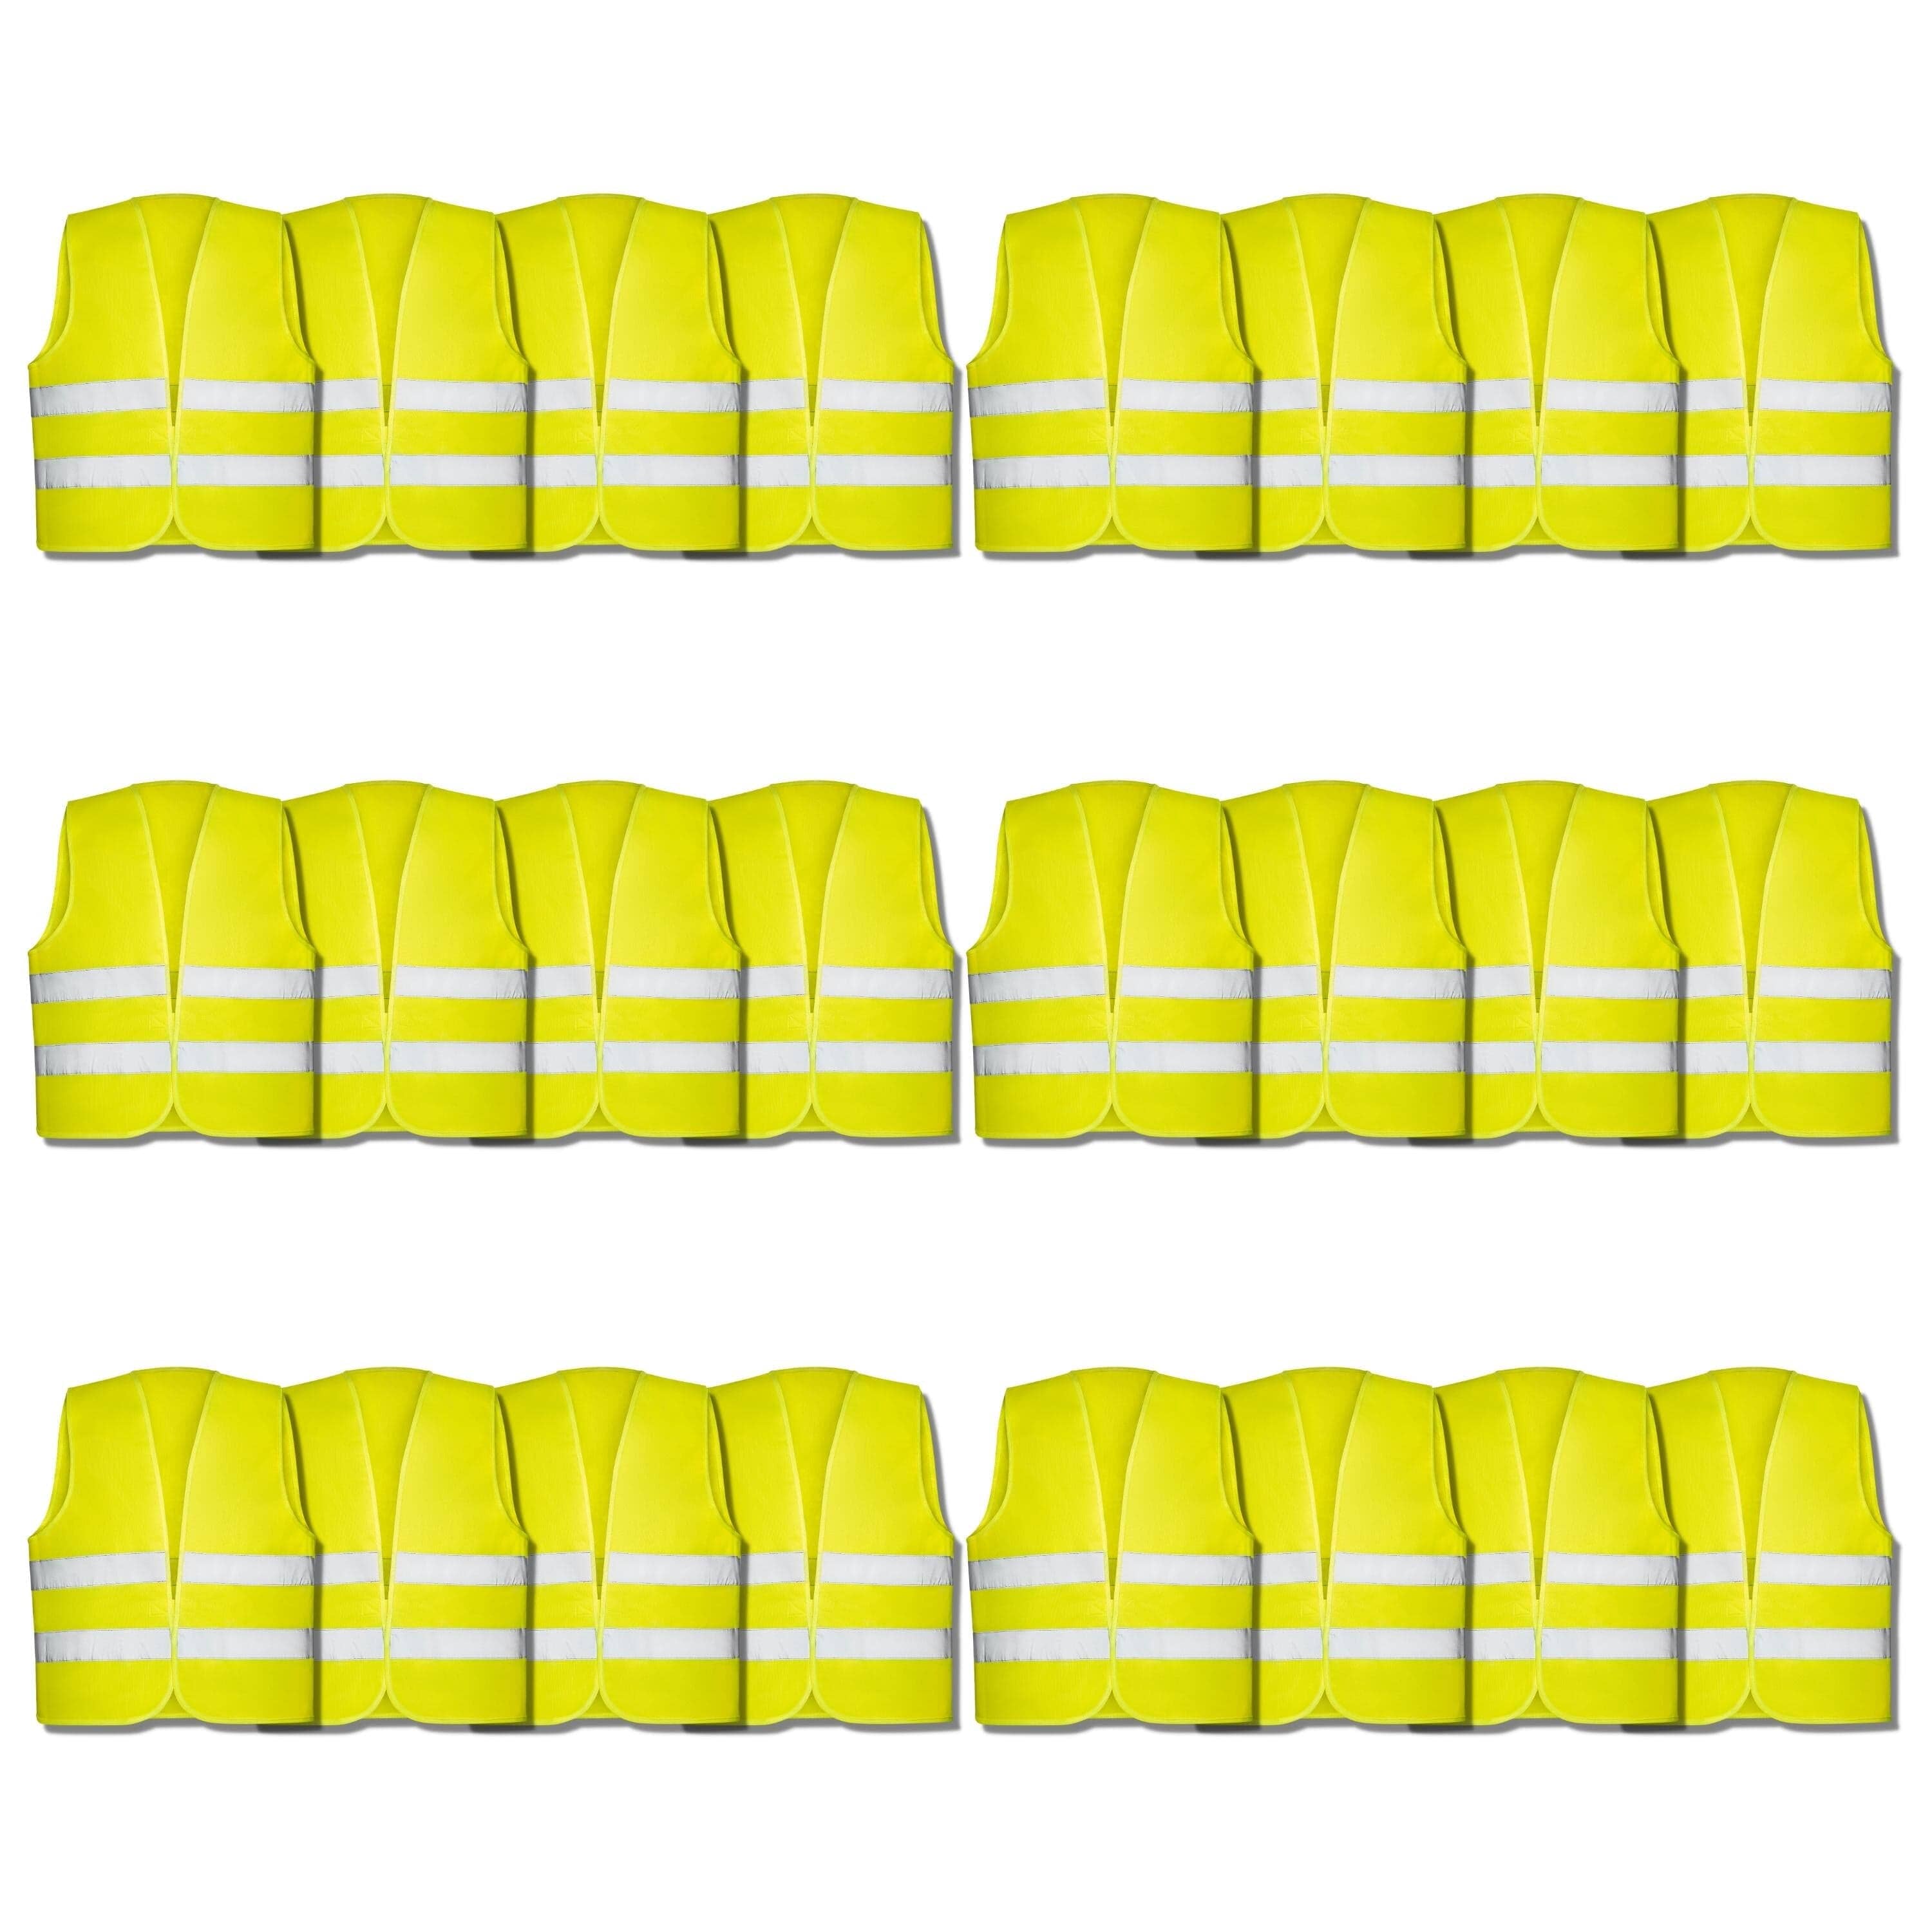 Warnwesten orange oder gelb EN ISO 20471 - PKW Pannenweste 2023 Unfallweste Sicherheitsweste reflektierend LKW, Motorrad, Baustellenfahrzeuge